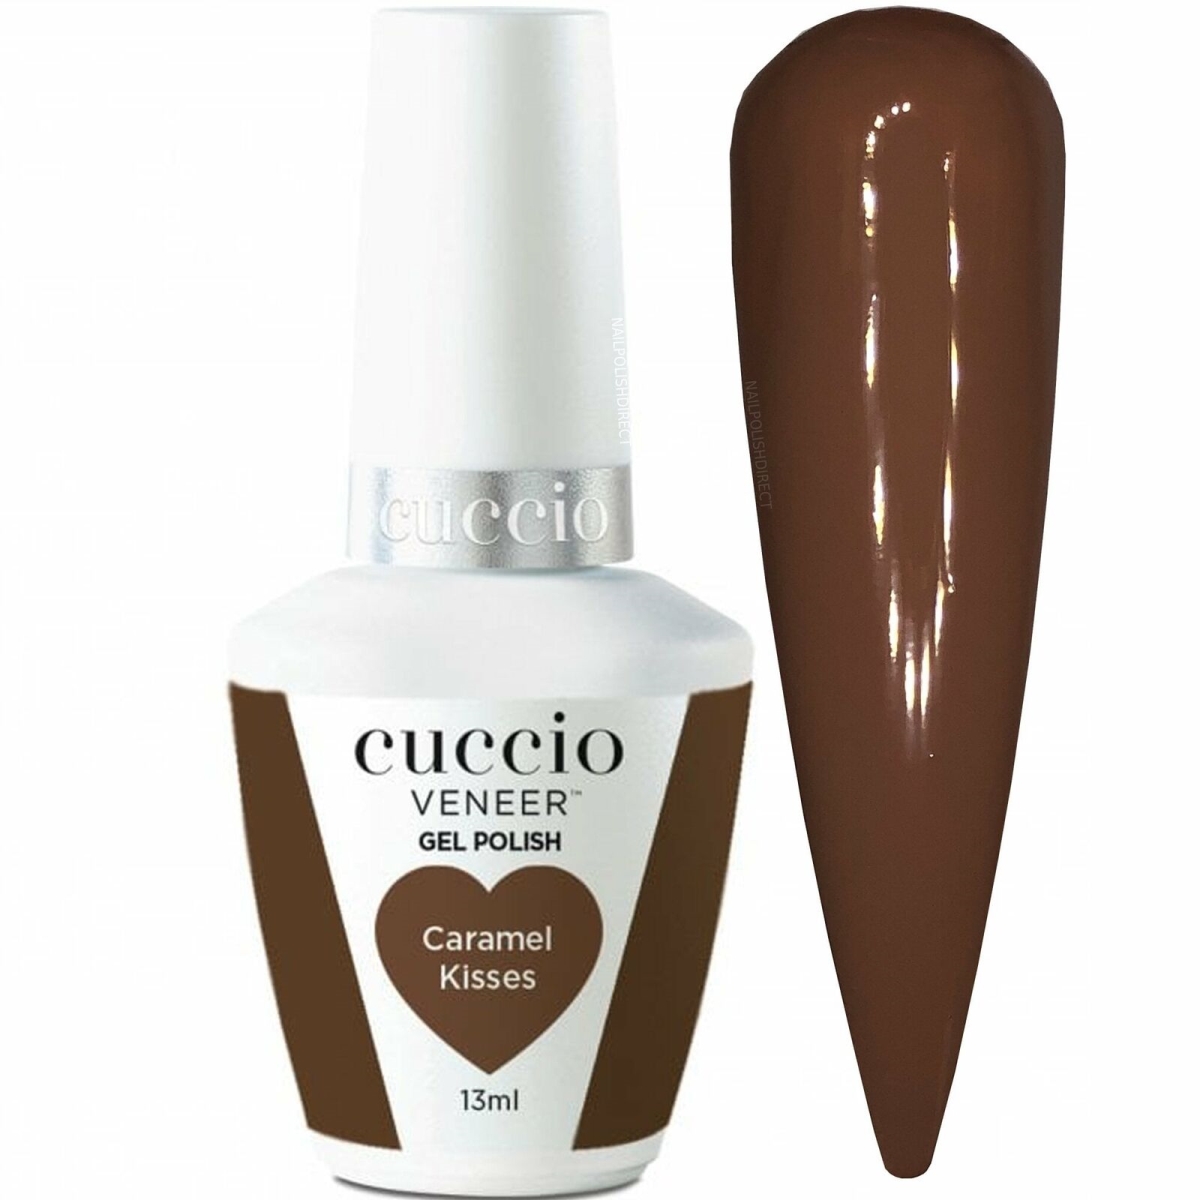 Picture of Cuccio I0113934 0.44 oz Veneer Soak Off Gel - Caramel Kisses Nail Polish by Cuccio for Women